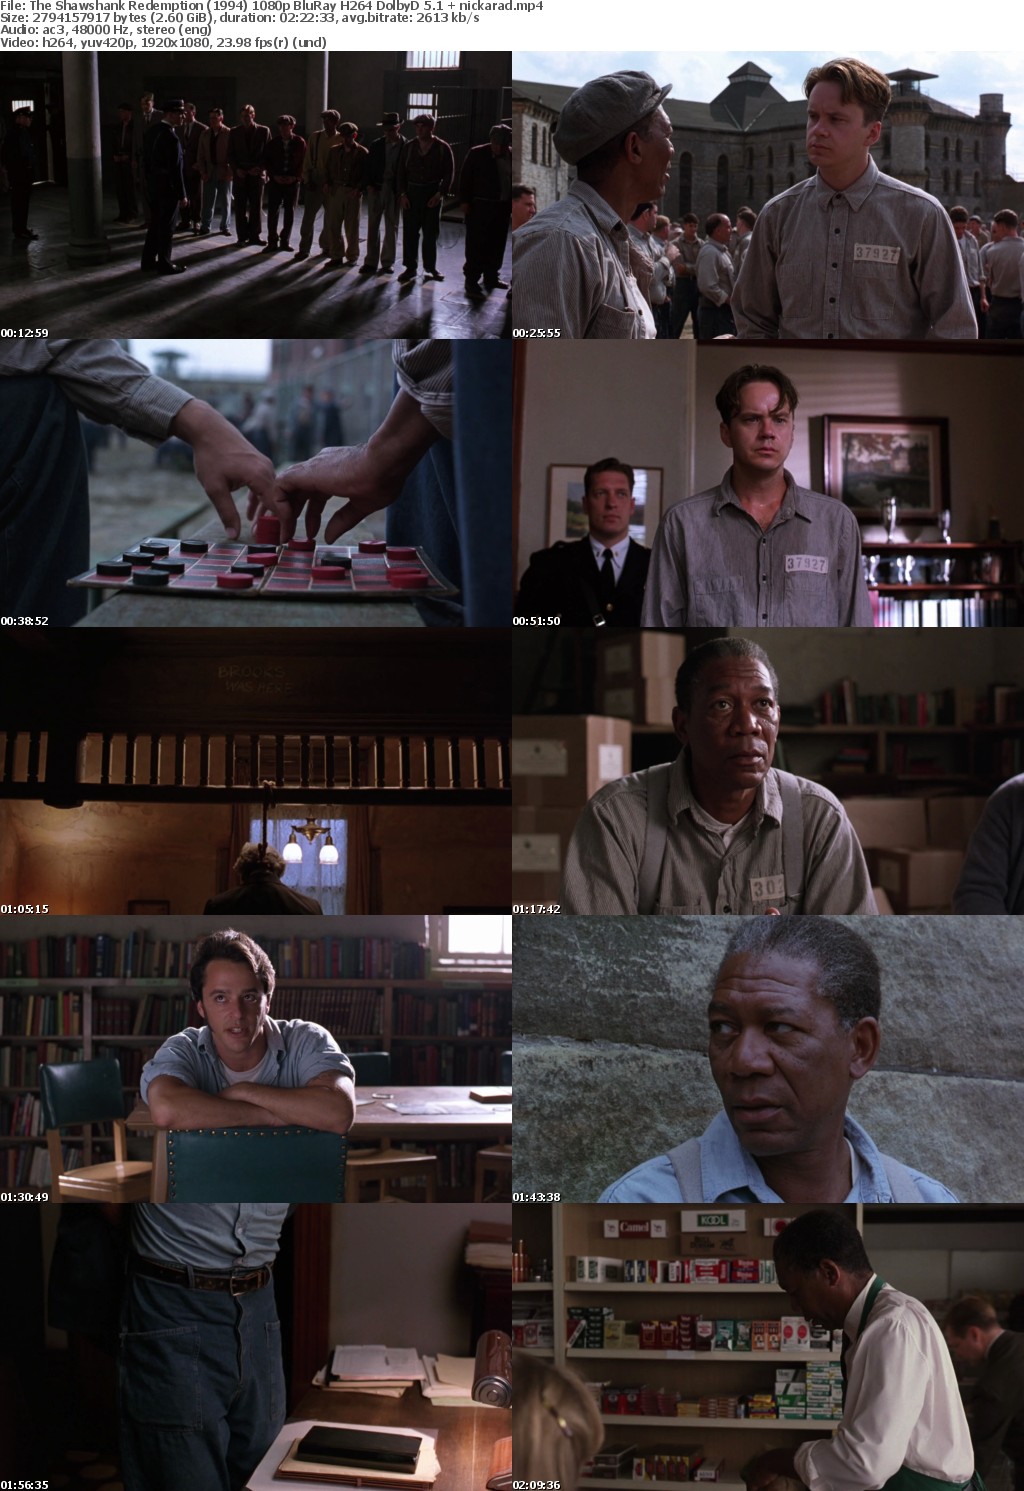 The Shawshank Redemption (1994) 1080p BluRay H264 DolbyD 5 1 nickarad